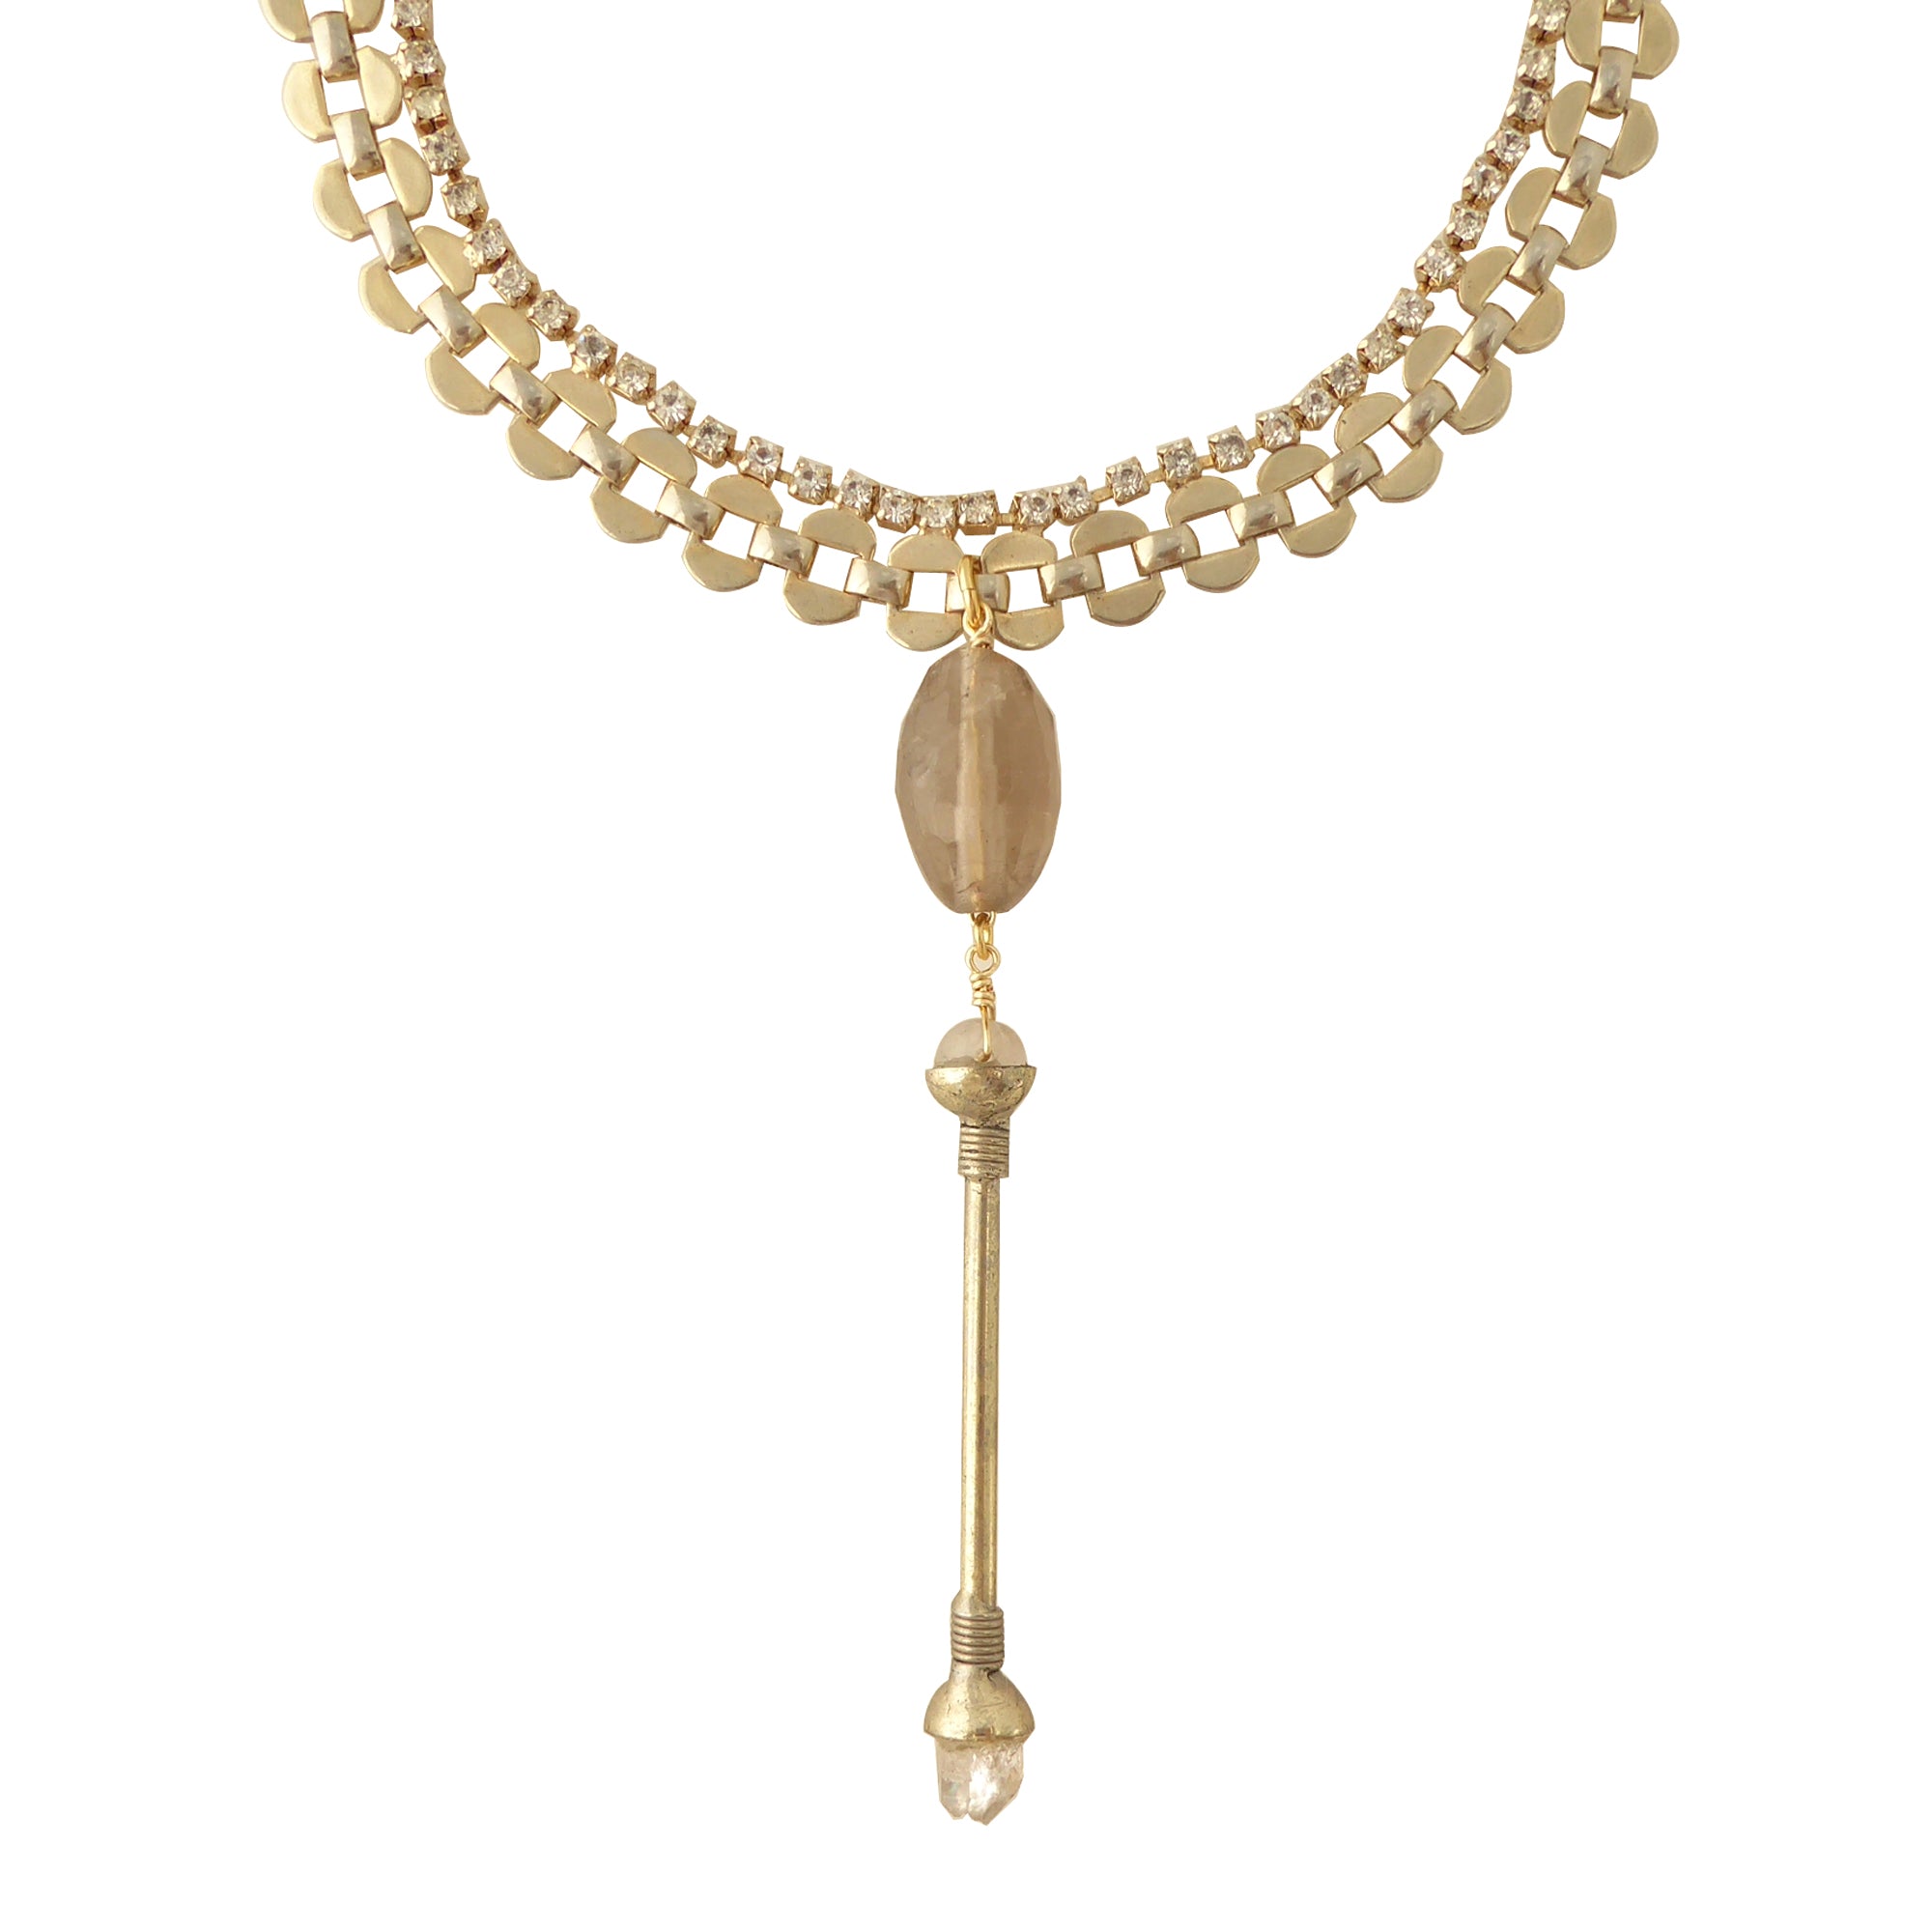 Crystal wand choker necklace by Jenny Dayco 1